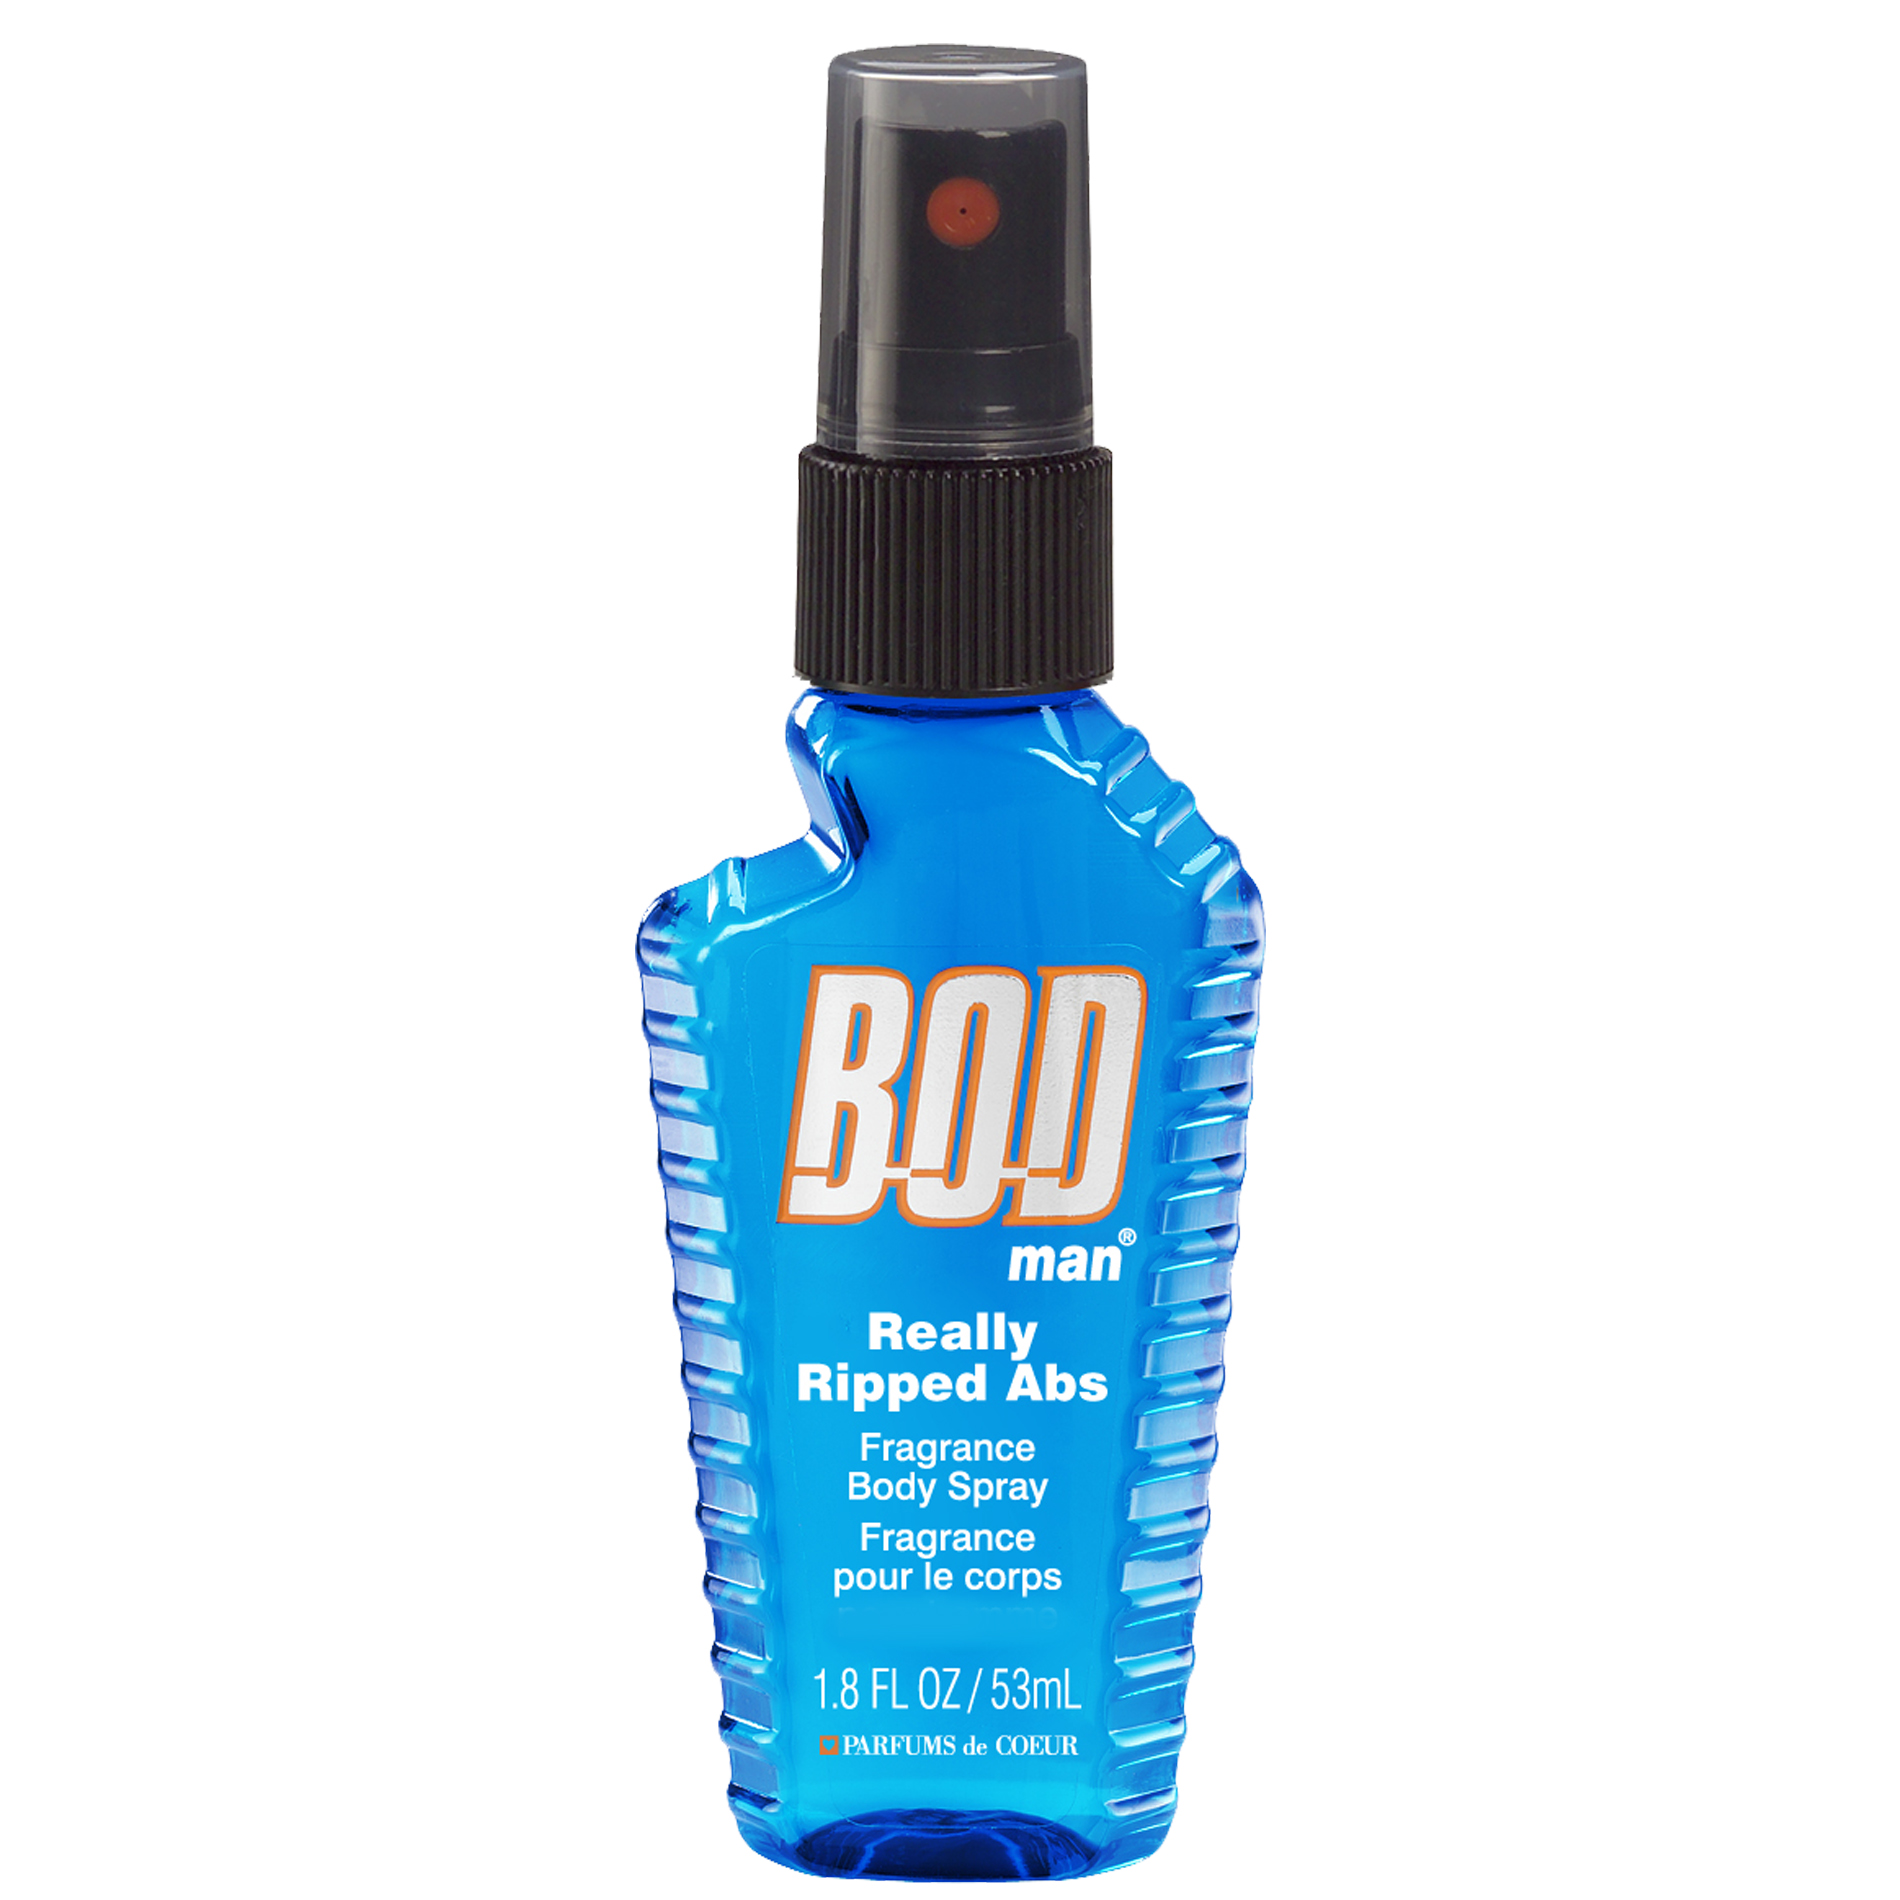 BOD Man Parfums De Coeur  Really Ripped Abs Fragrance Body Spray  1.8 Oz.